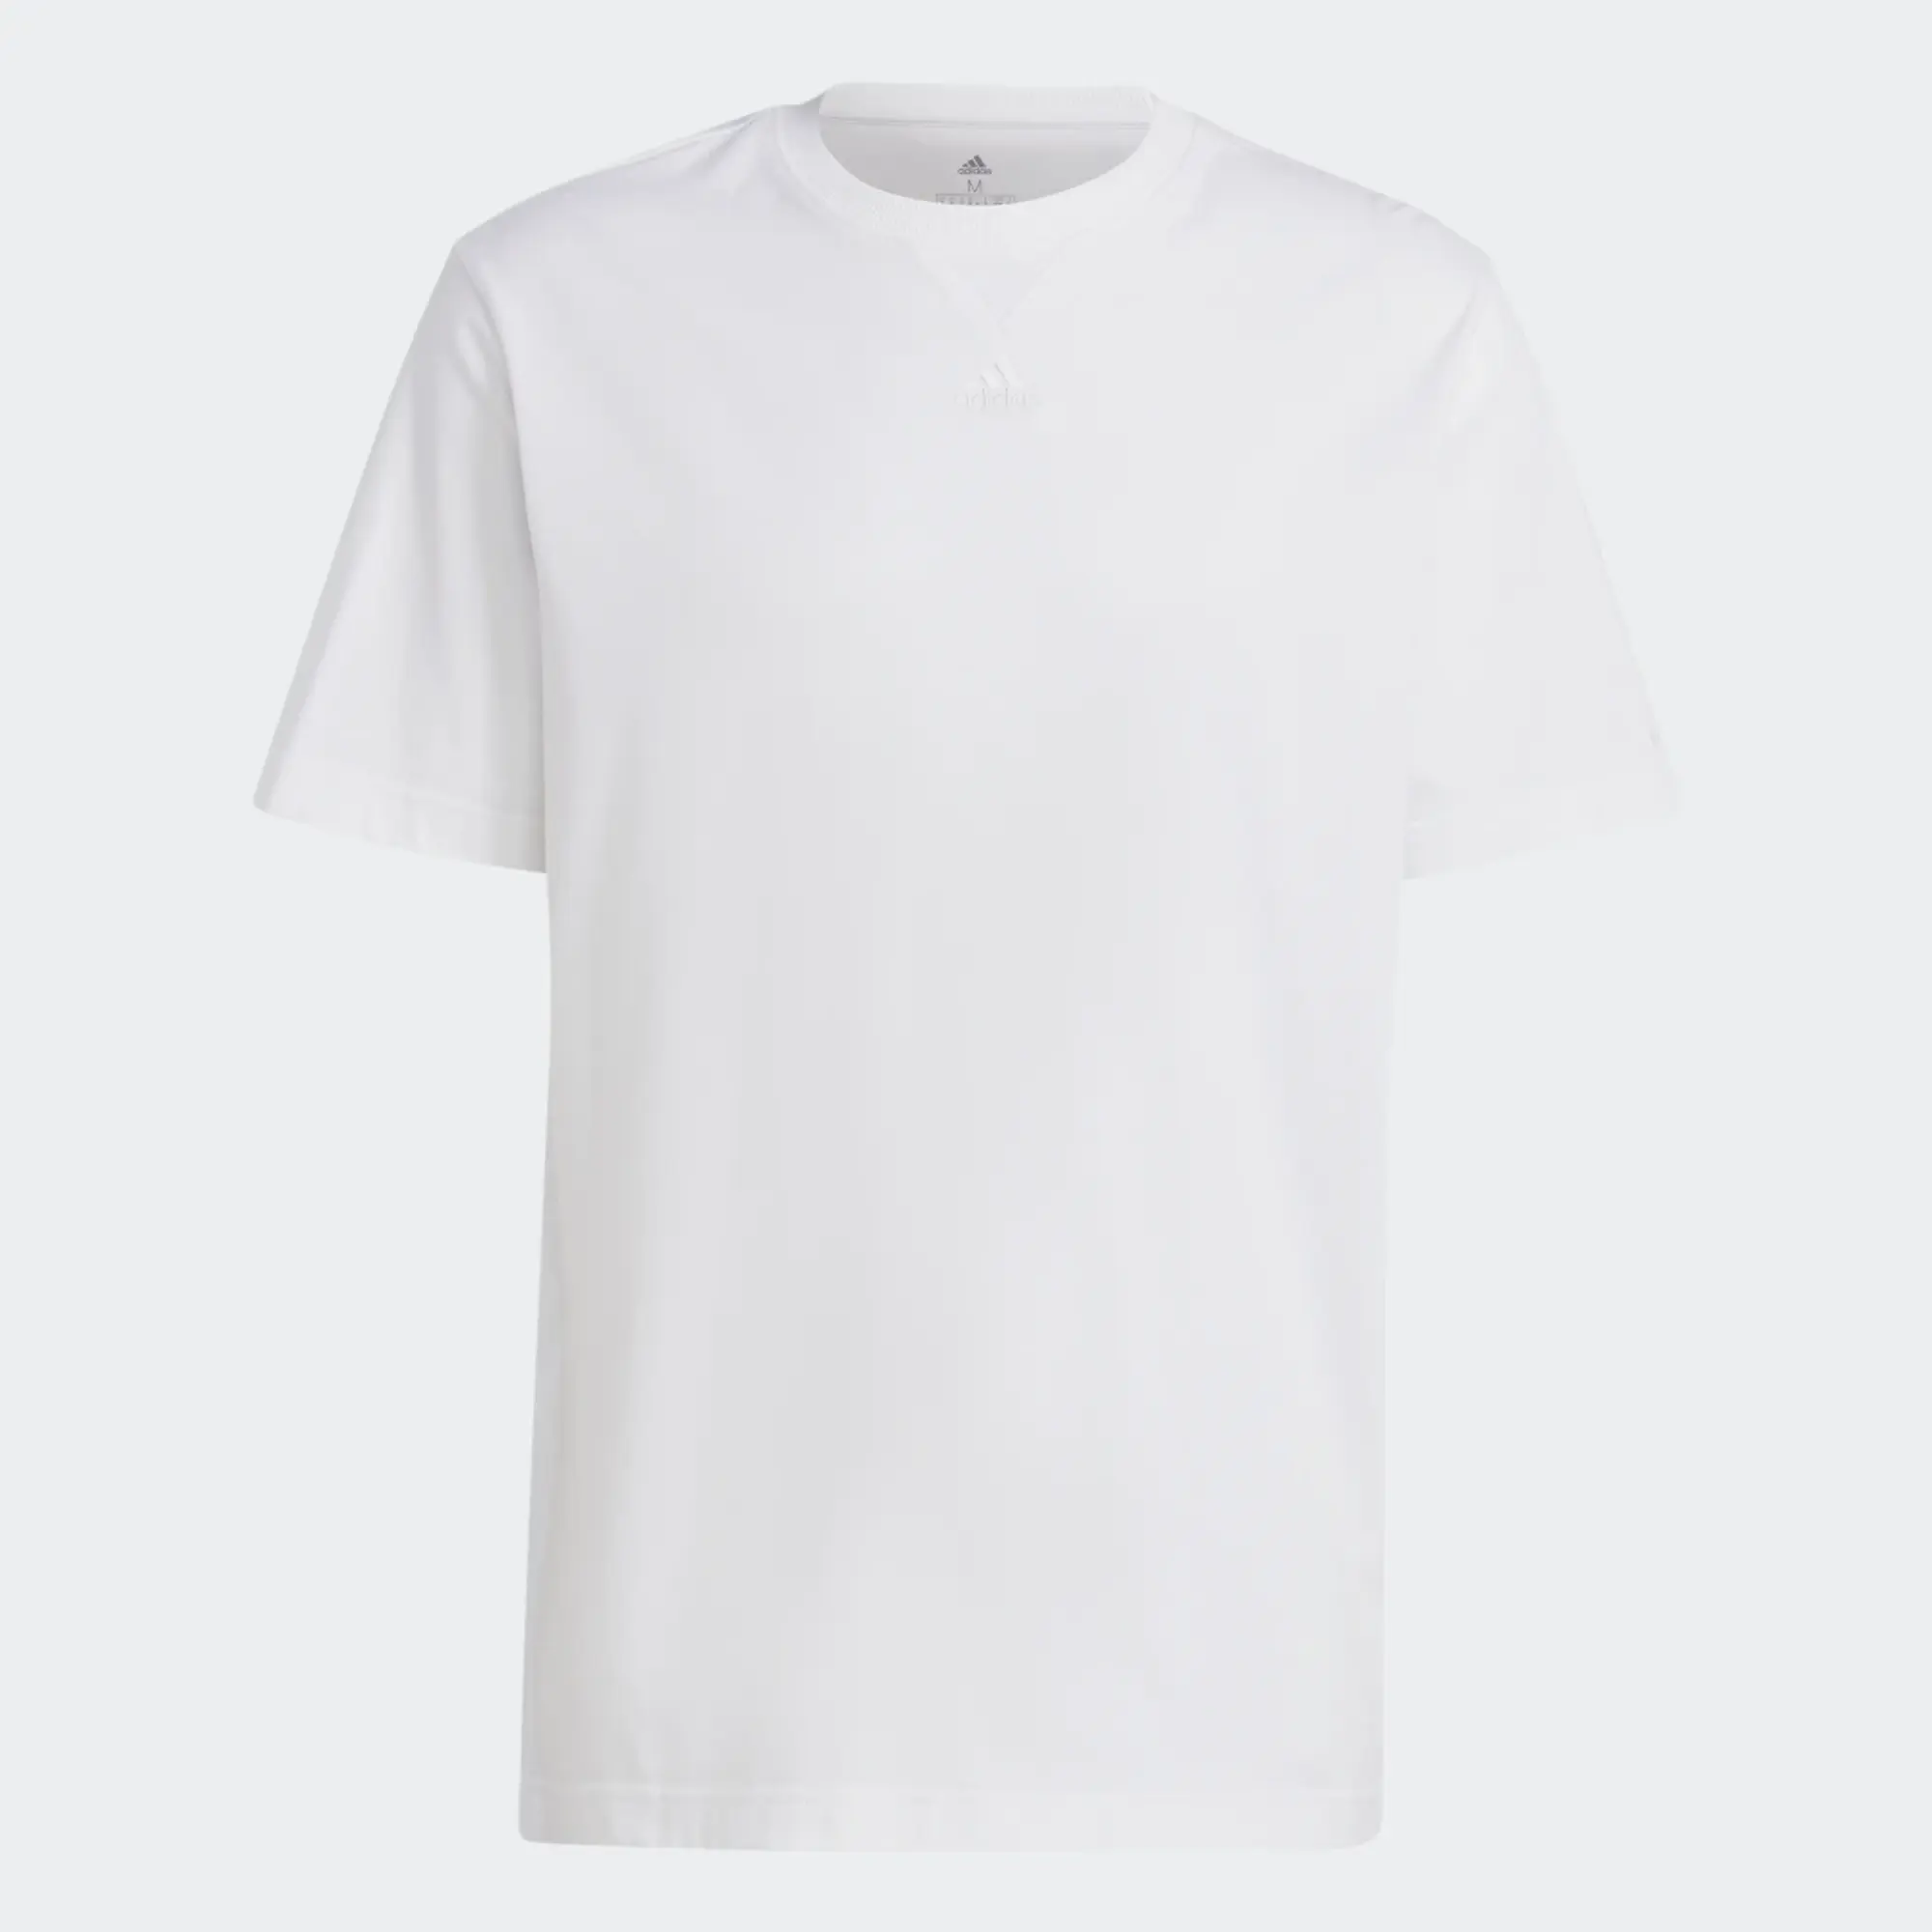 adidas Wales All SZN T-Shirt - White - Mens